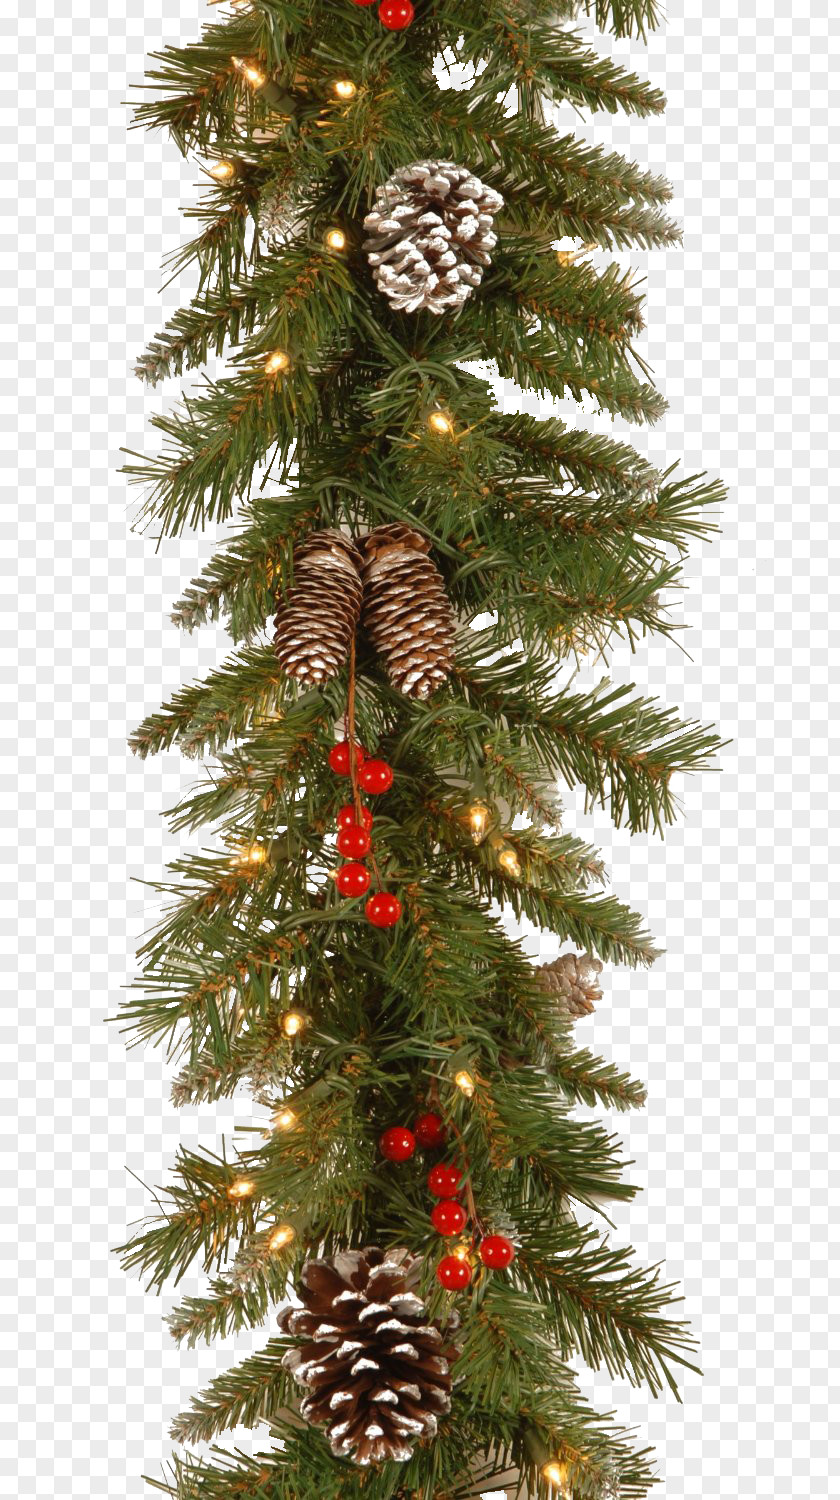 Pinheiro Christmas Tree Lights Garland Ornament PNG